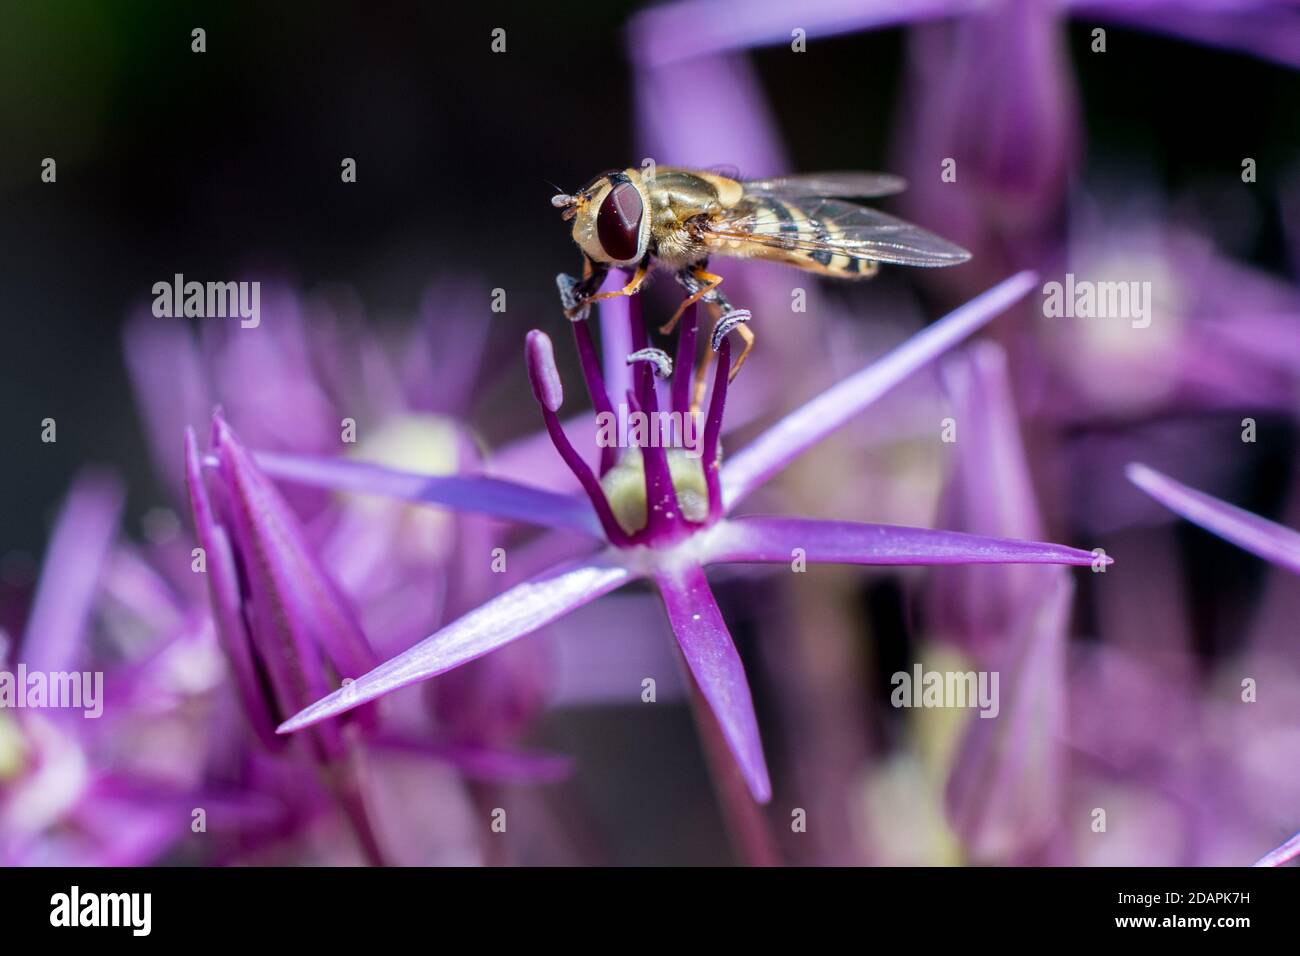 Yellow and Black Hoverfly Feeding on Purple Allium Flower Stock Photo